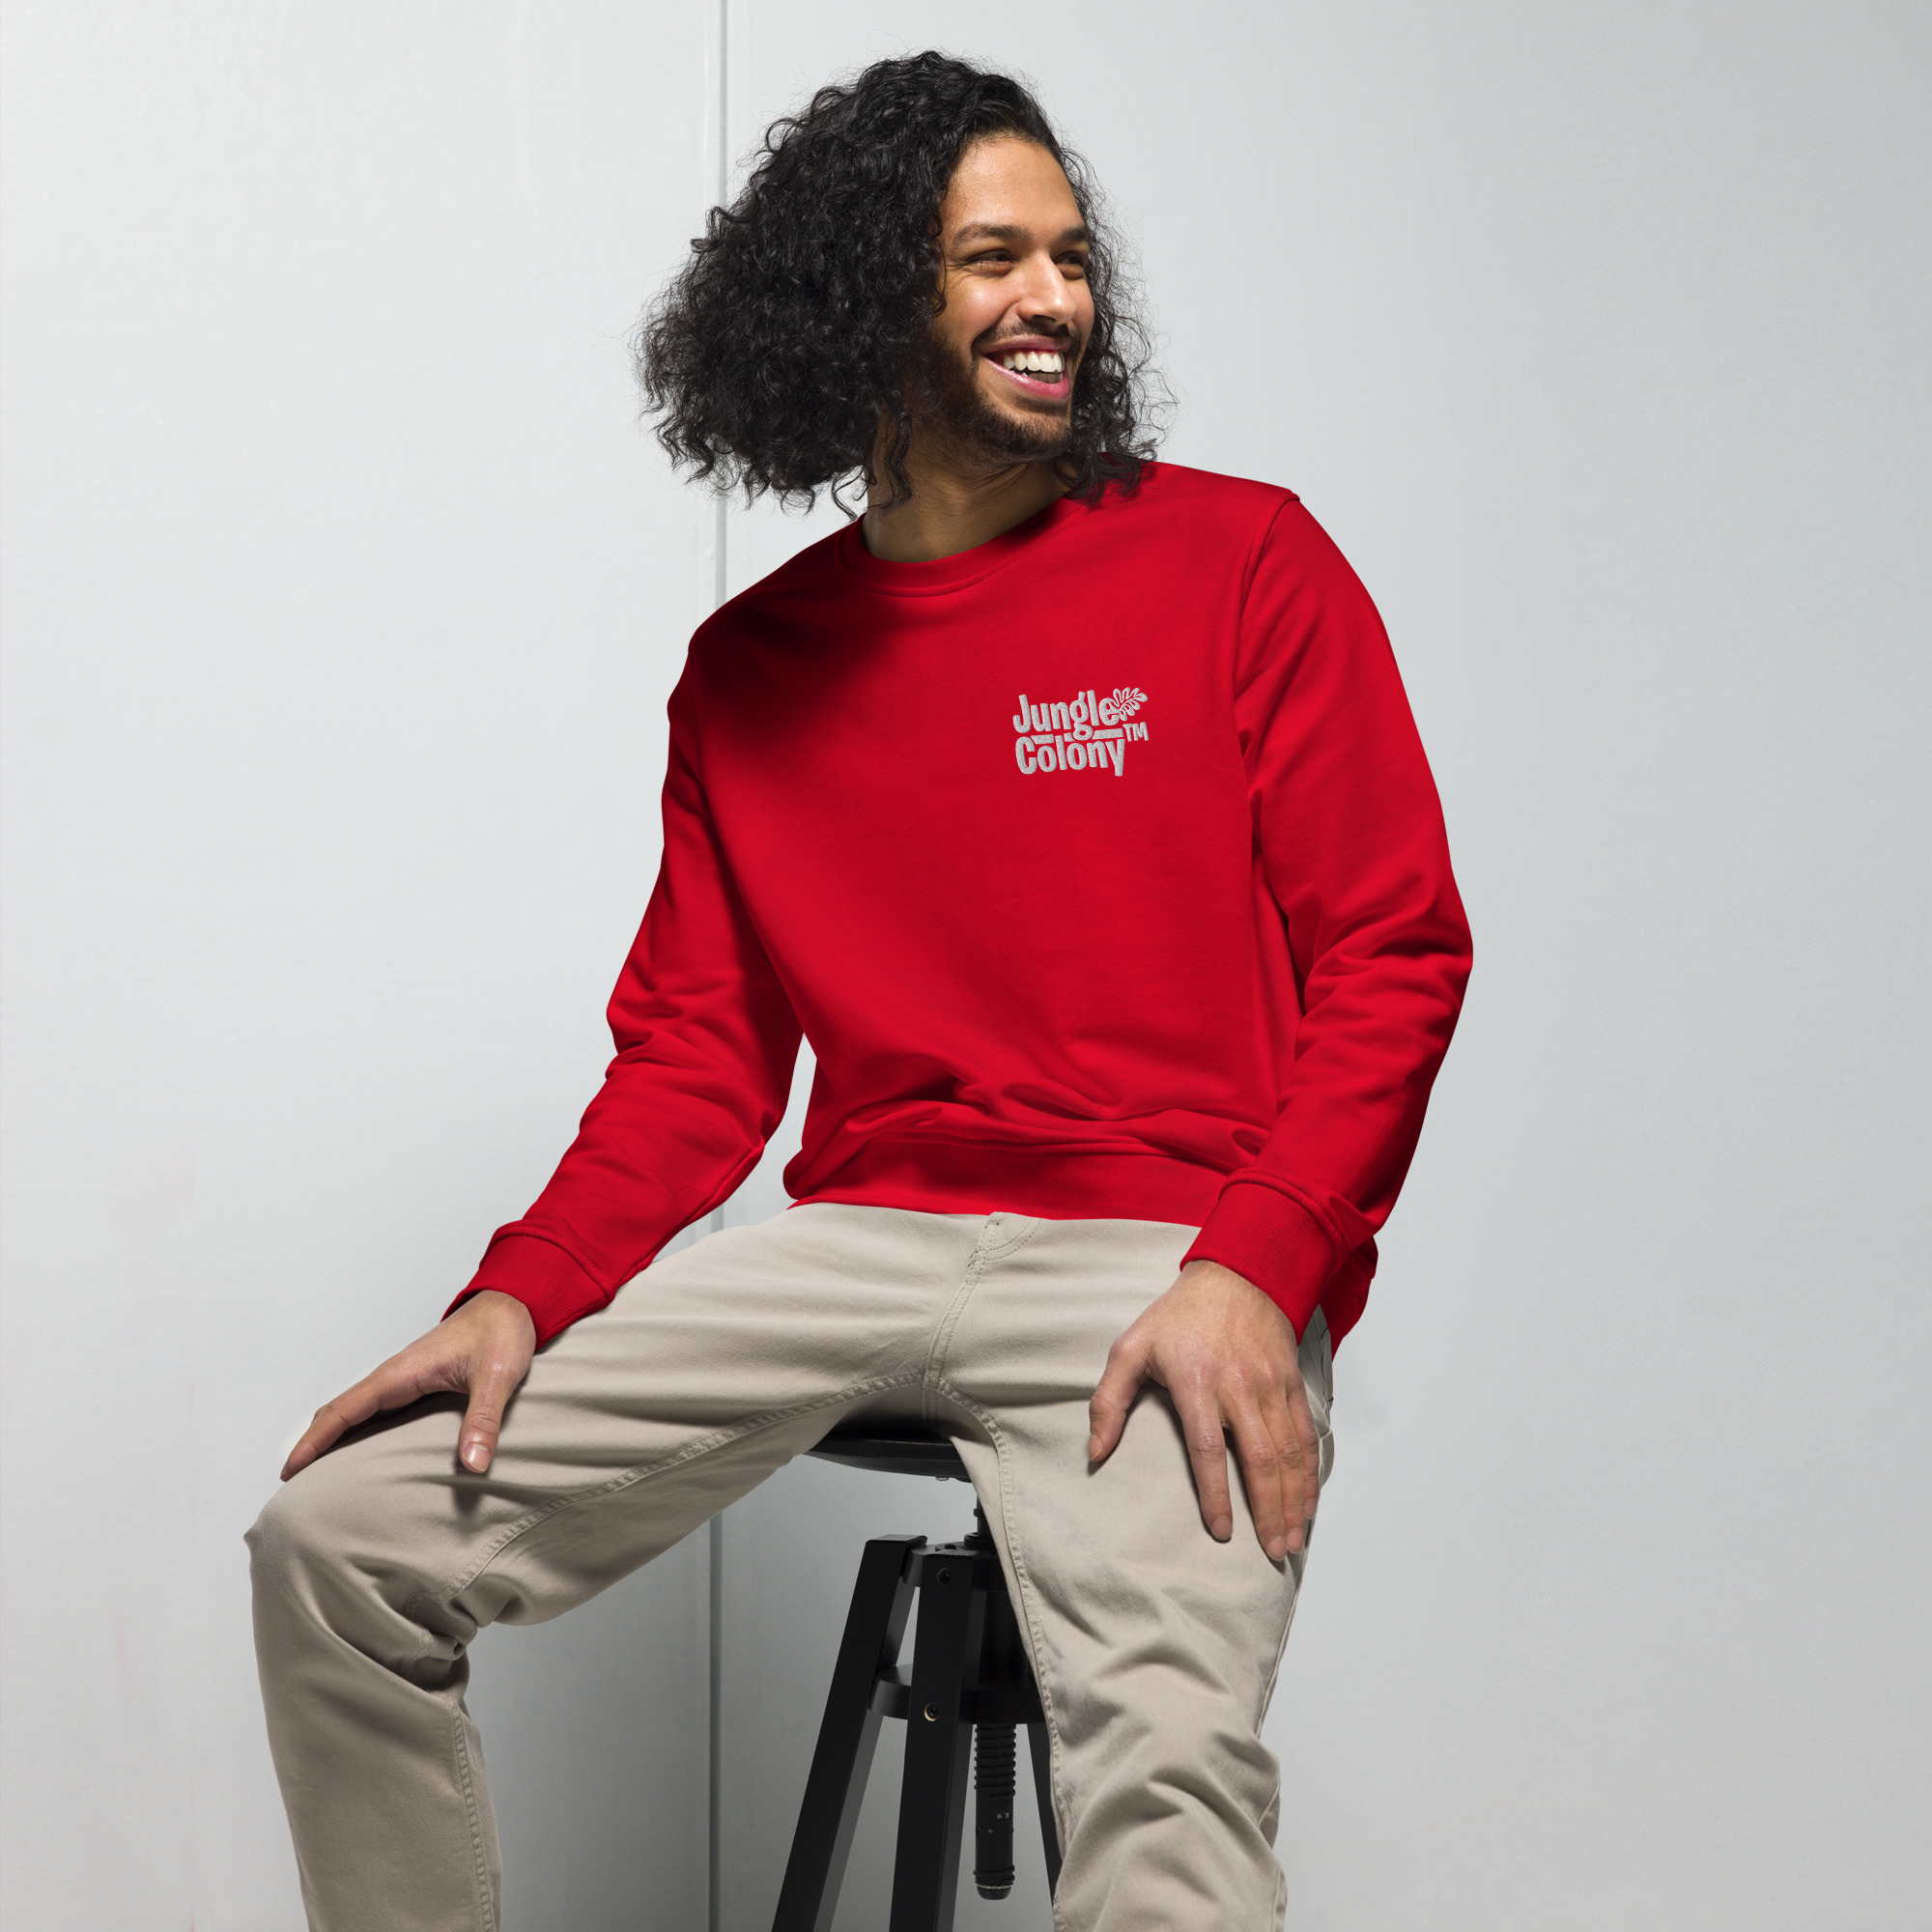 unisex-organic-sweatshirt-red-front-64200a783919a.jpg